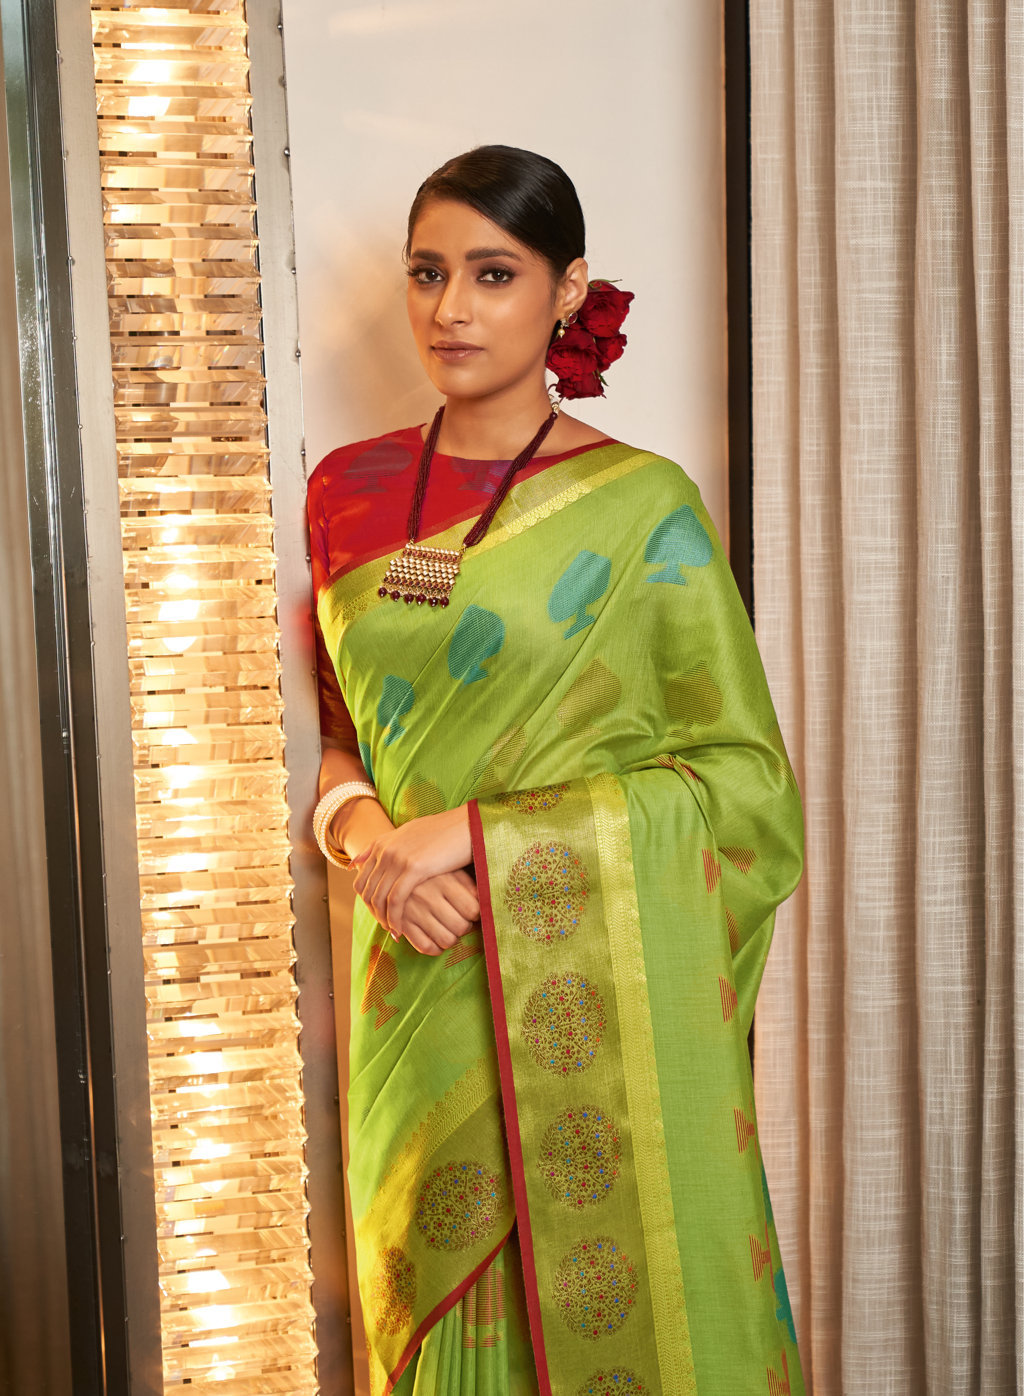 Sangam Swarna Designer Handloom Cotton Sarees